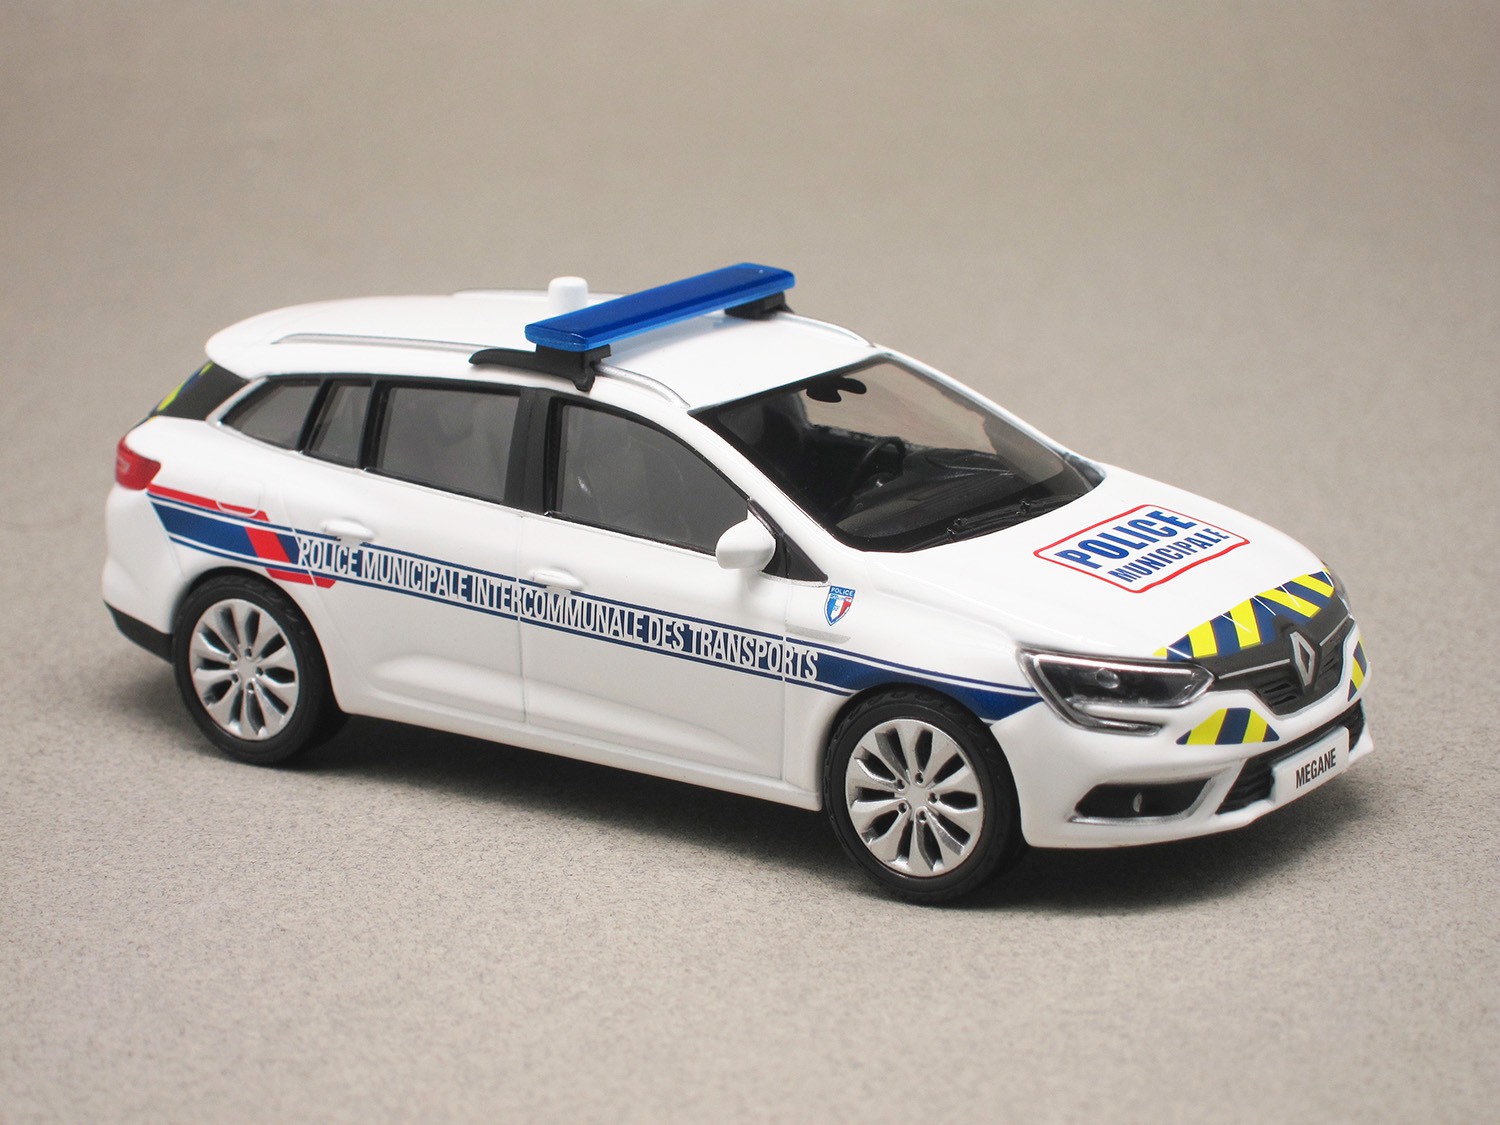 Renault Mégane 4 Estate Police Intercommunale des transports (Norev) 1:43